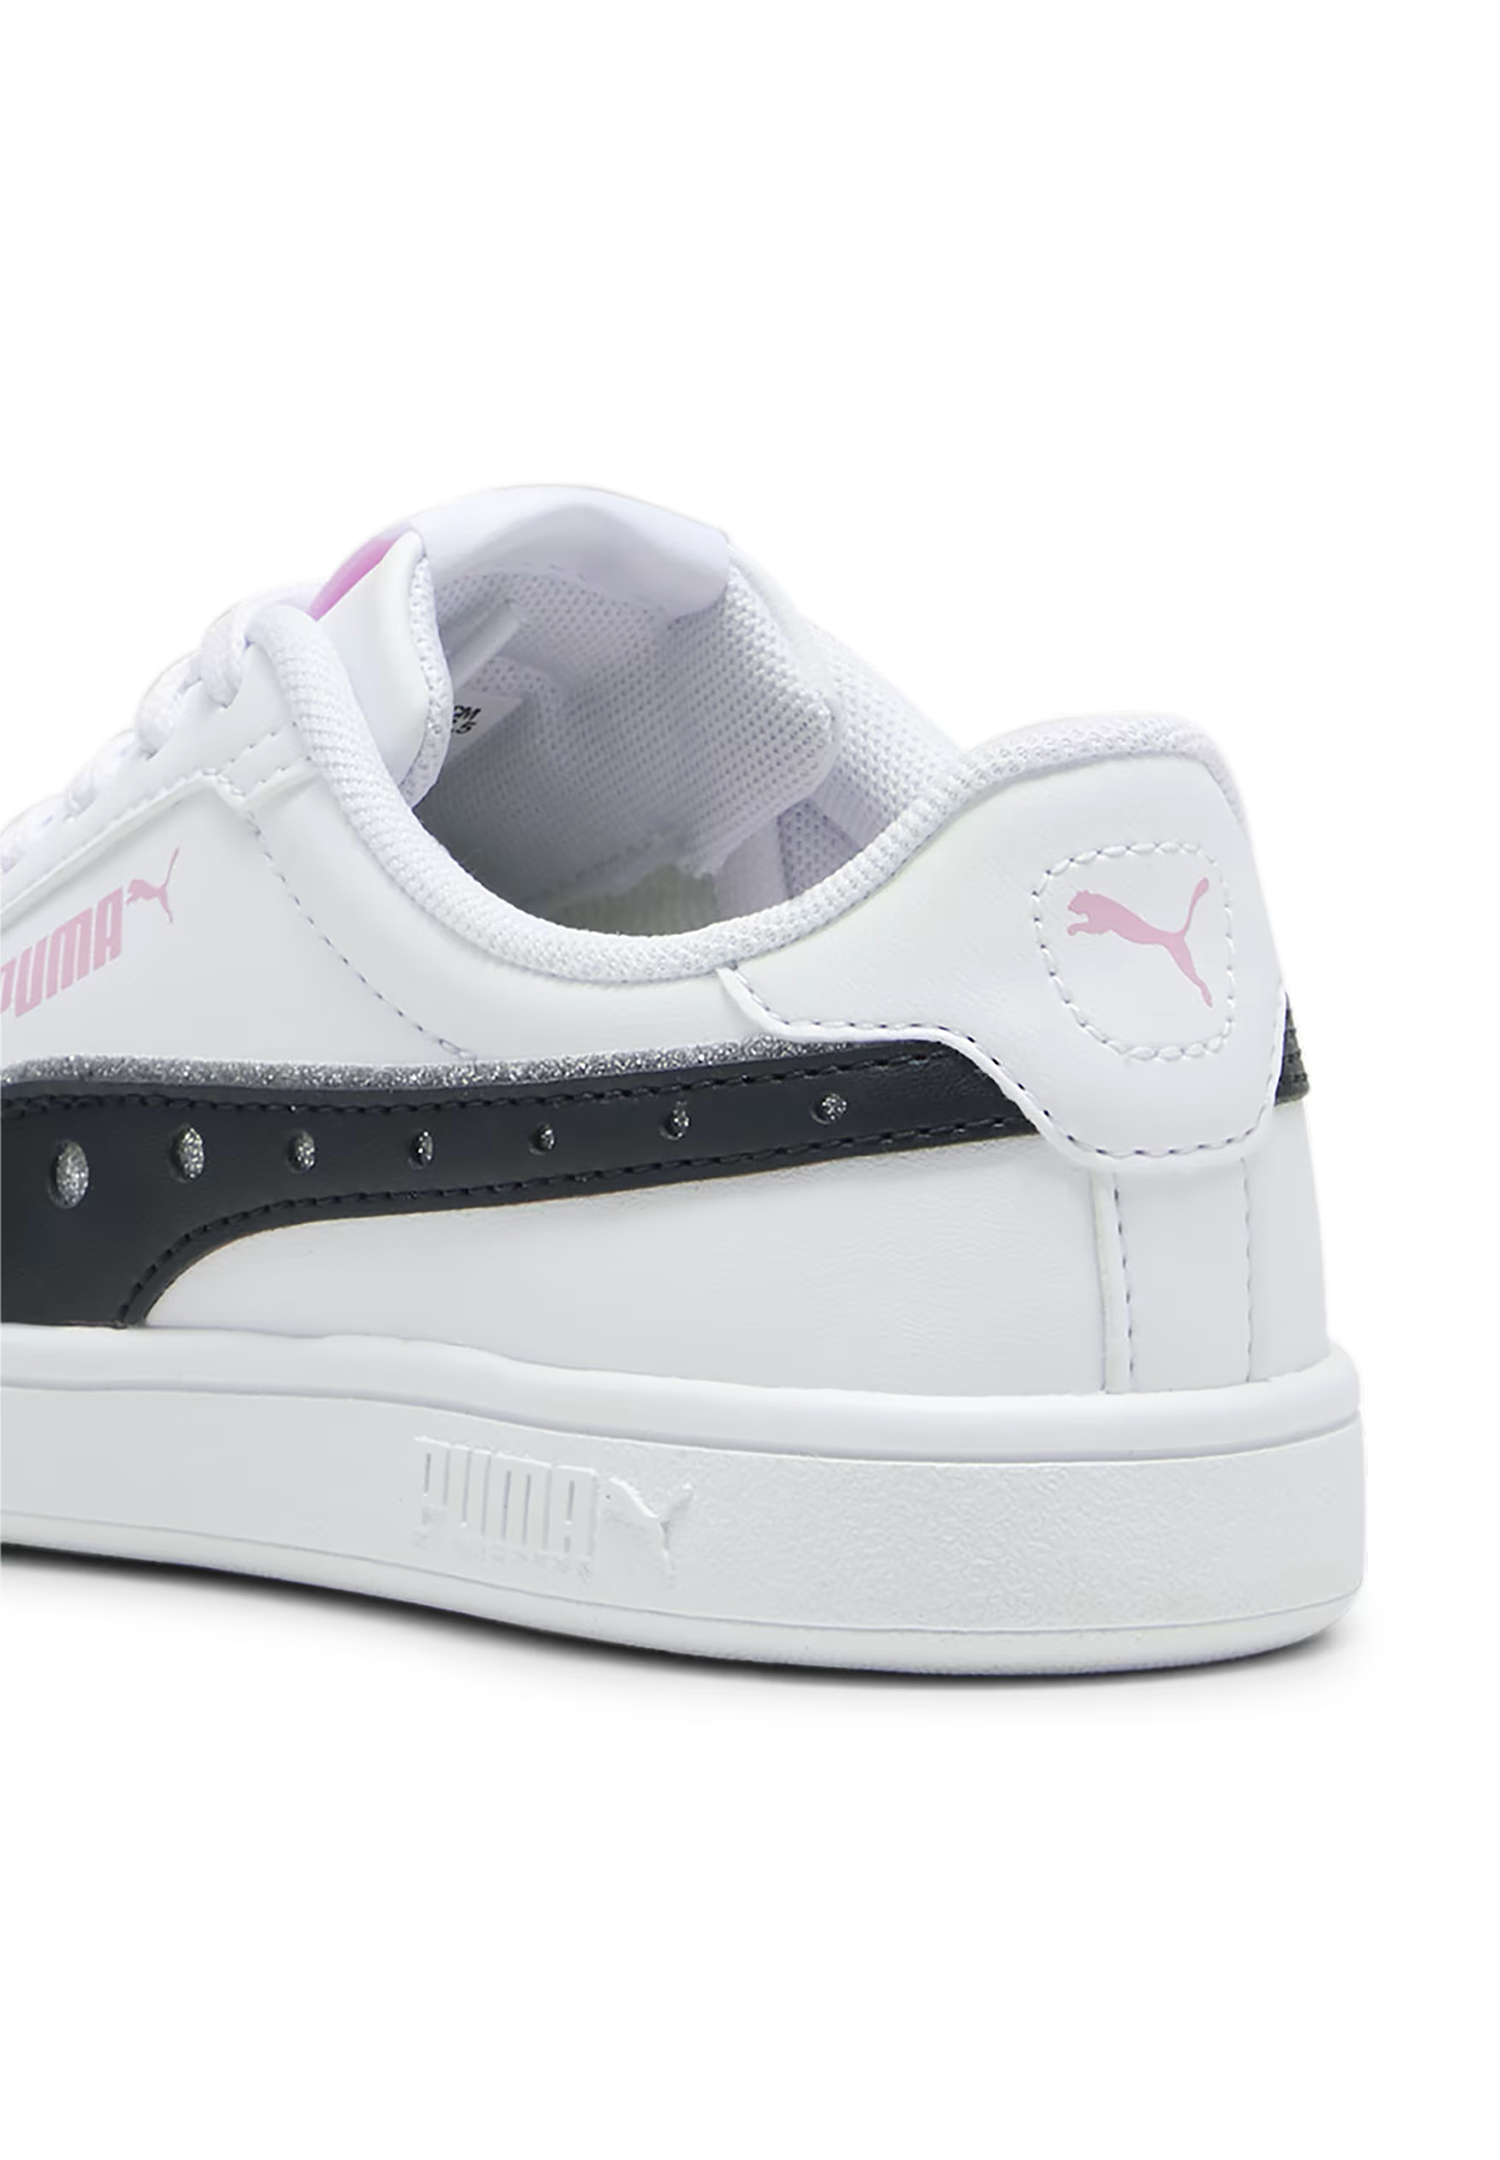 PUMA Smash 3.0 DanceParty PS Kids Sneaker Schuhe weiß-schwarz 395607 01